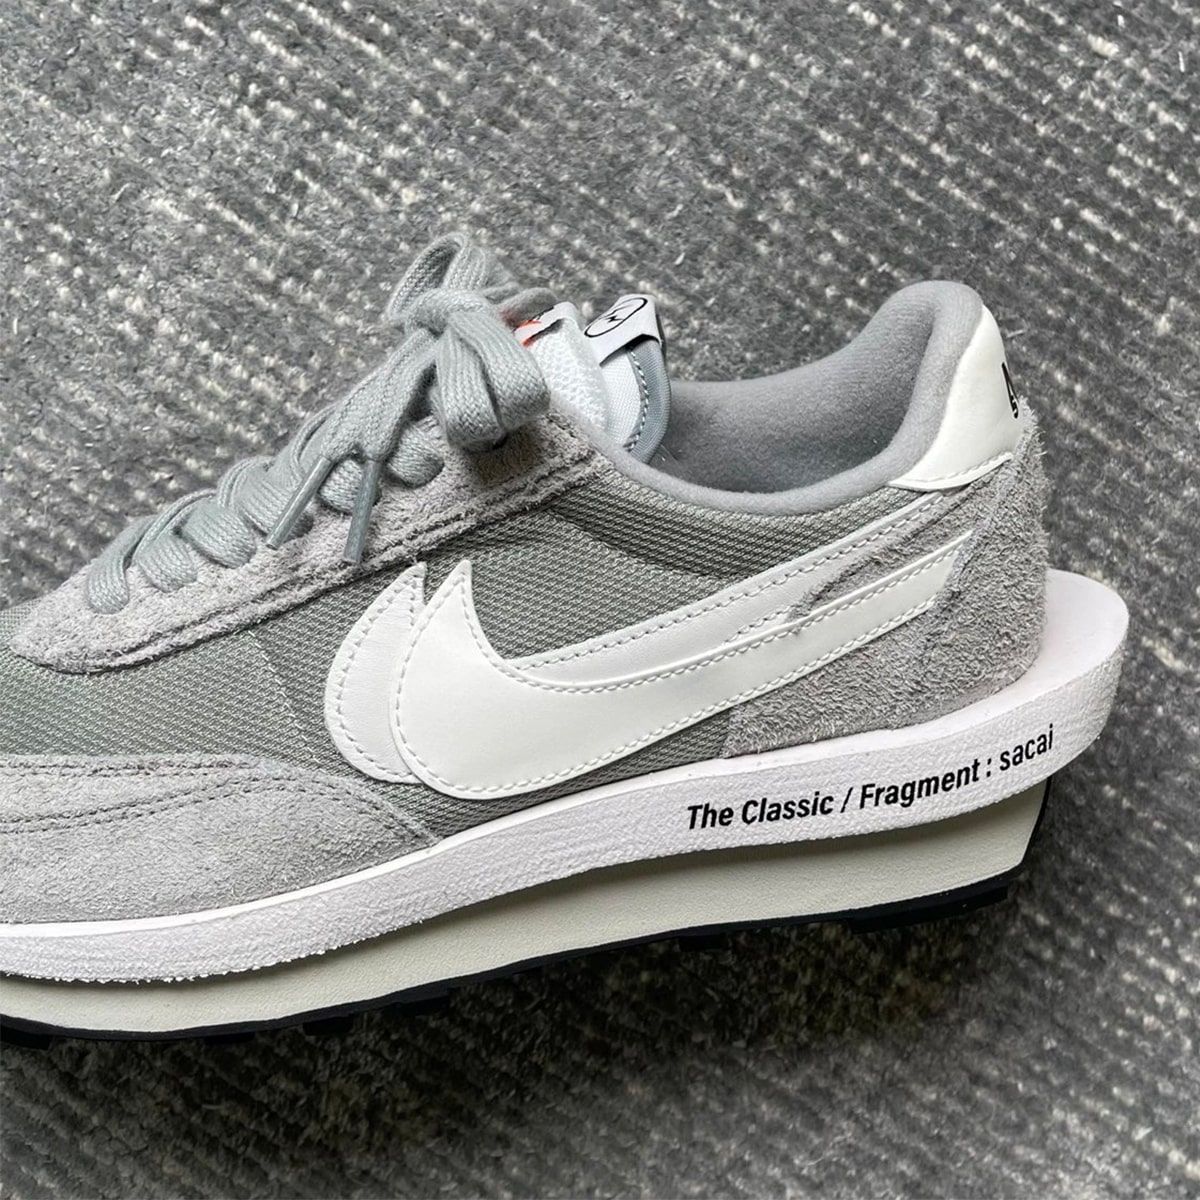 New Looks at the Grey/White Fragment x sacai x Nike LDWaffle 